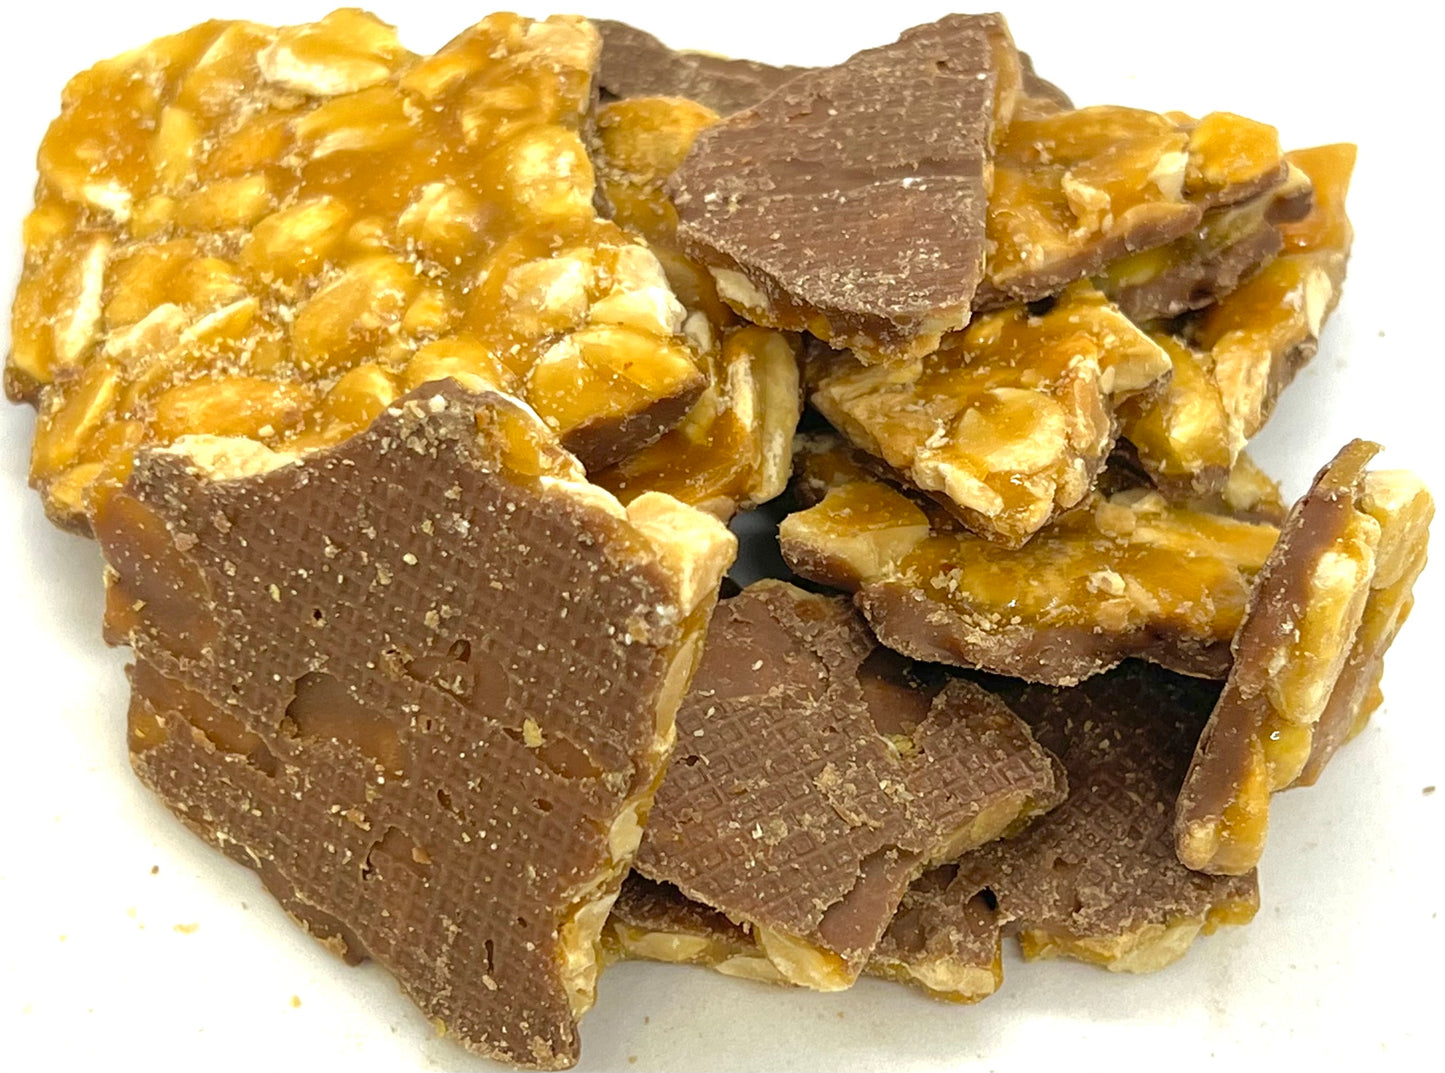 Chocolate covered peanut brittle